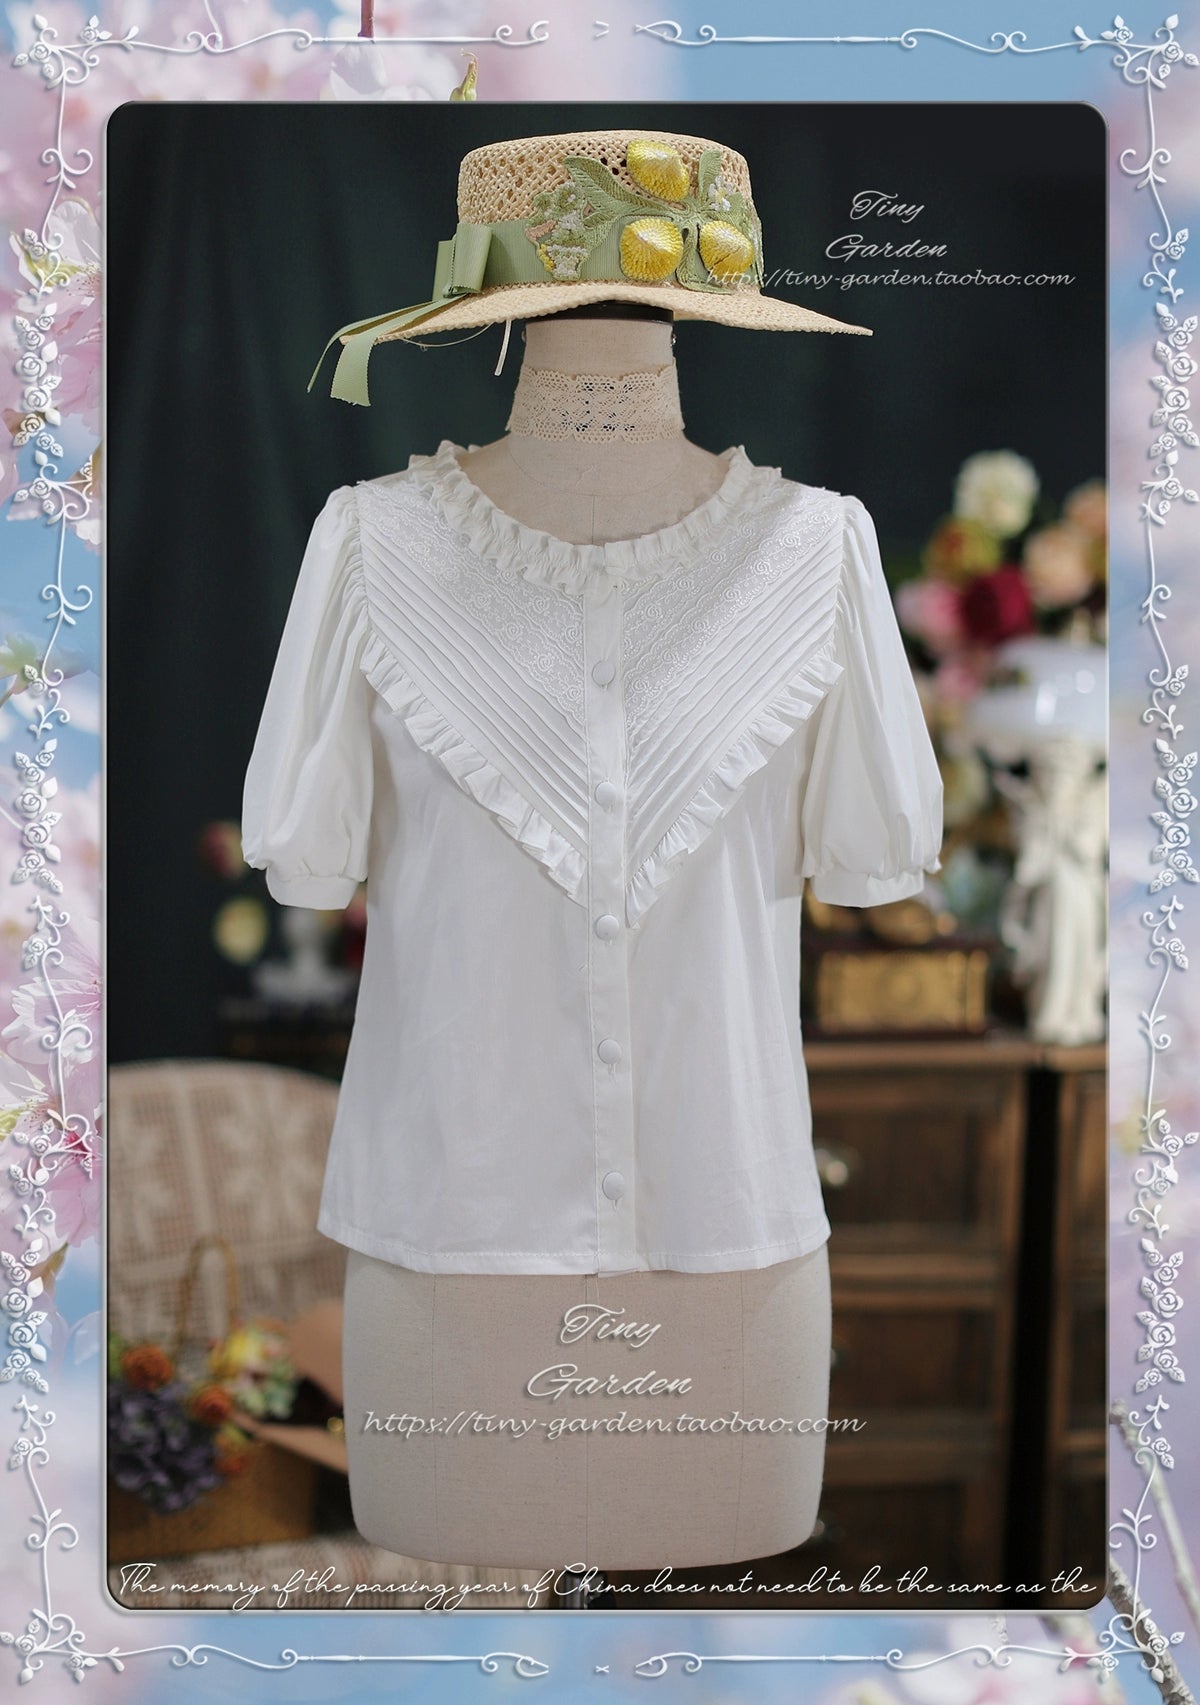 Tiny garden~Elegant Lolita Blouse Short Sleeve Lolita Shirt S White 